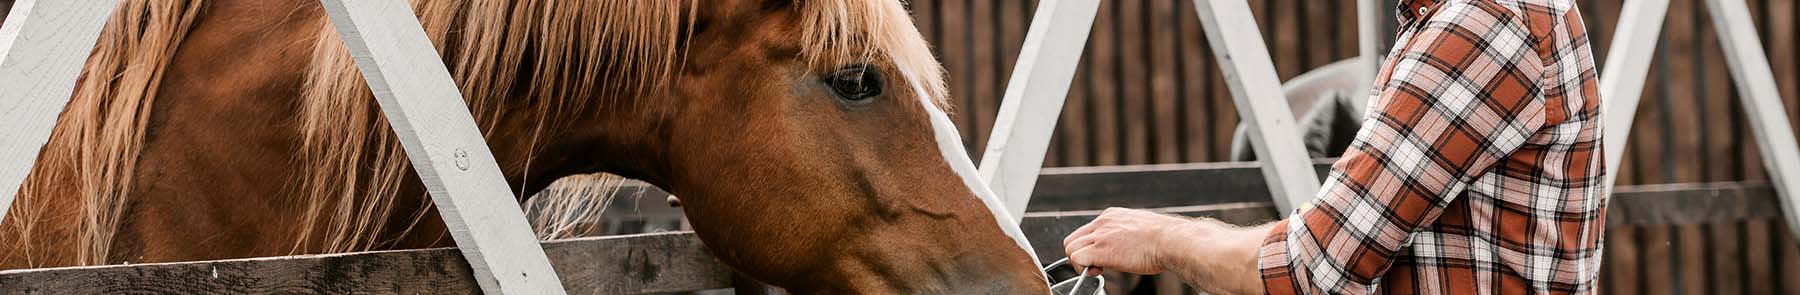 Veterinary Care for Horses